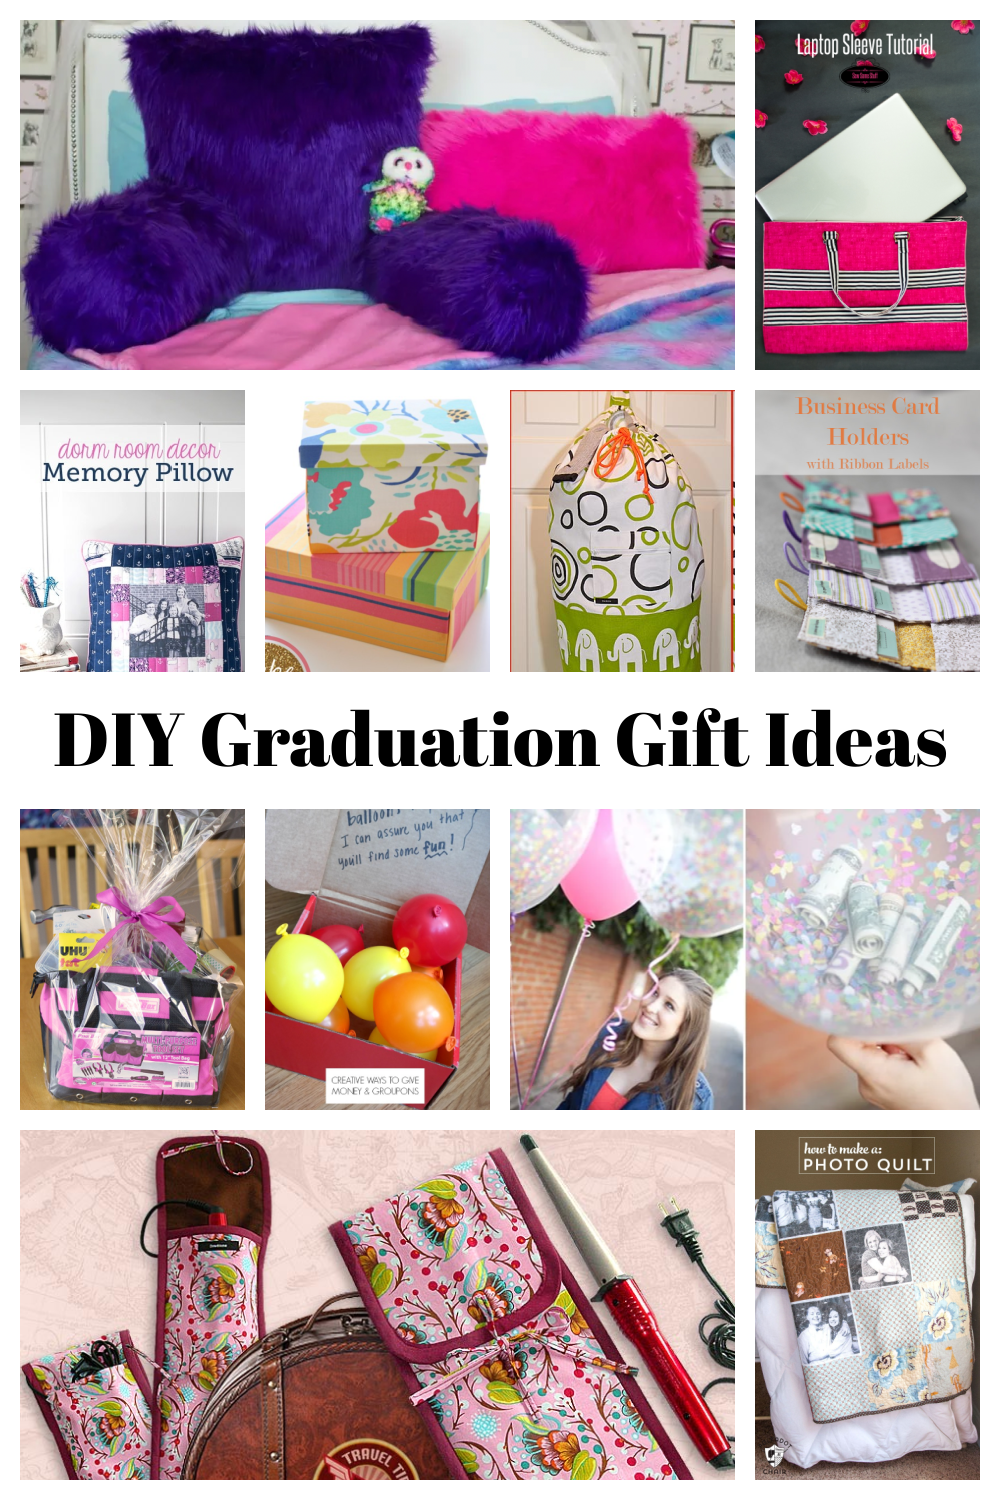 DIY Graduation gift ideas